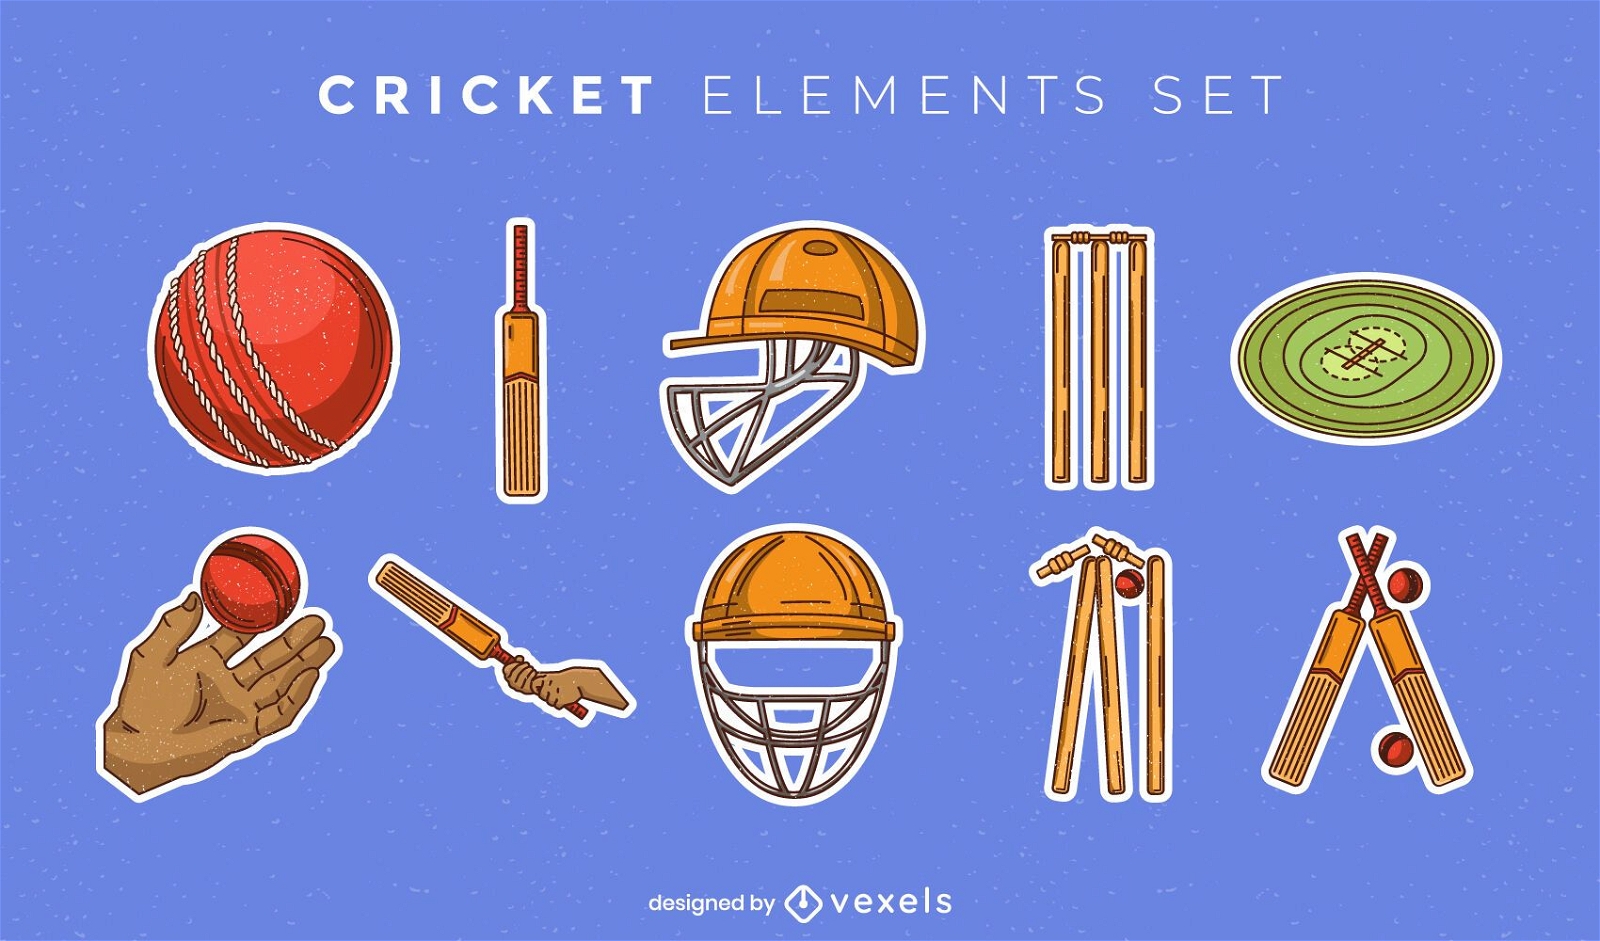 Cricket-Ausrüstungselementsatz